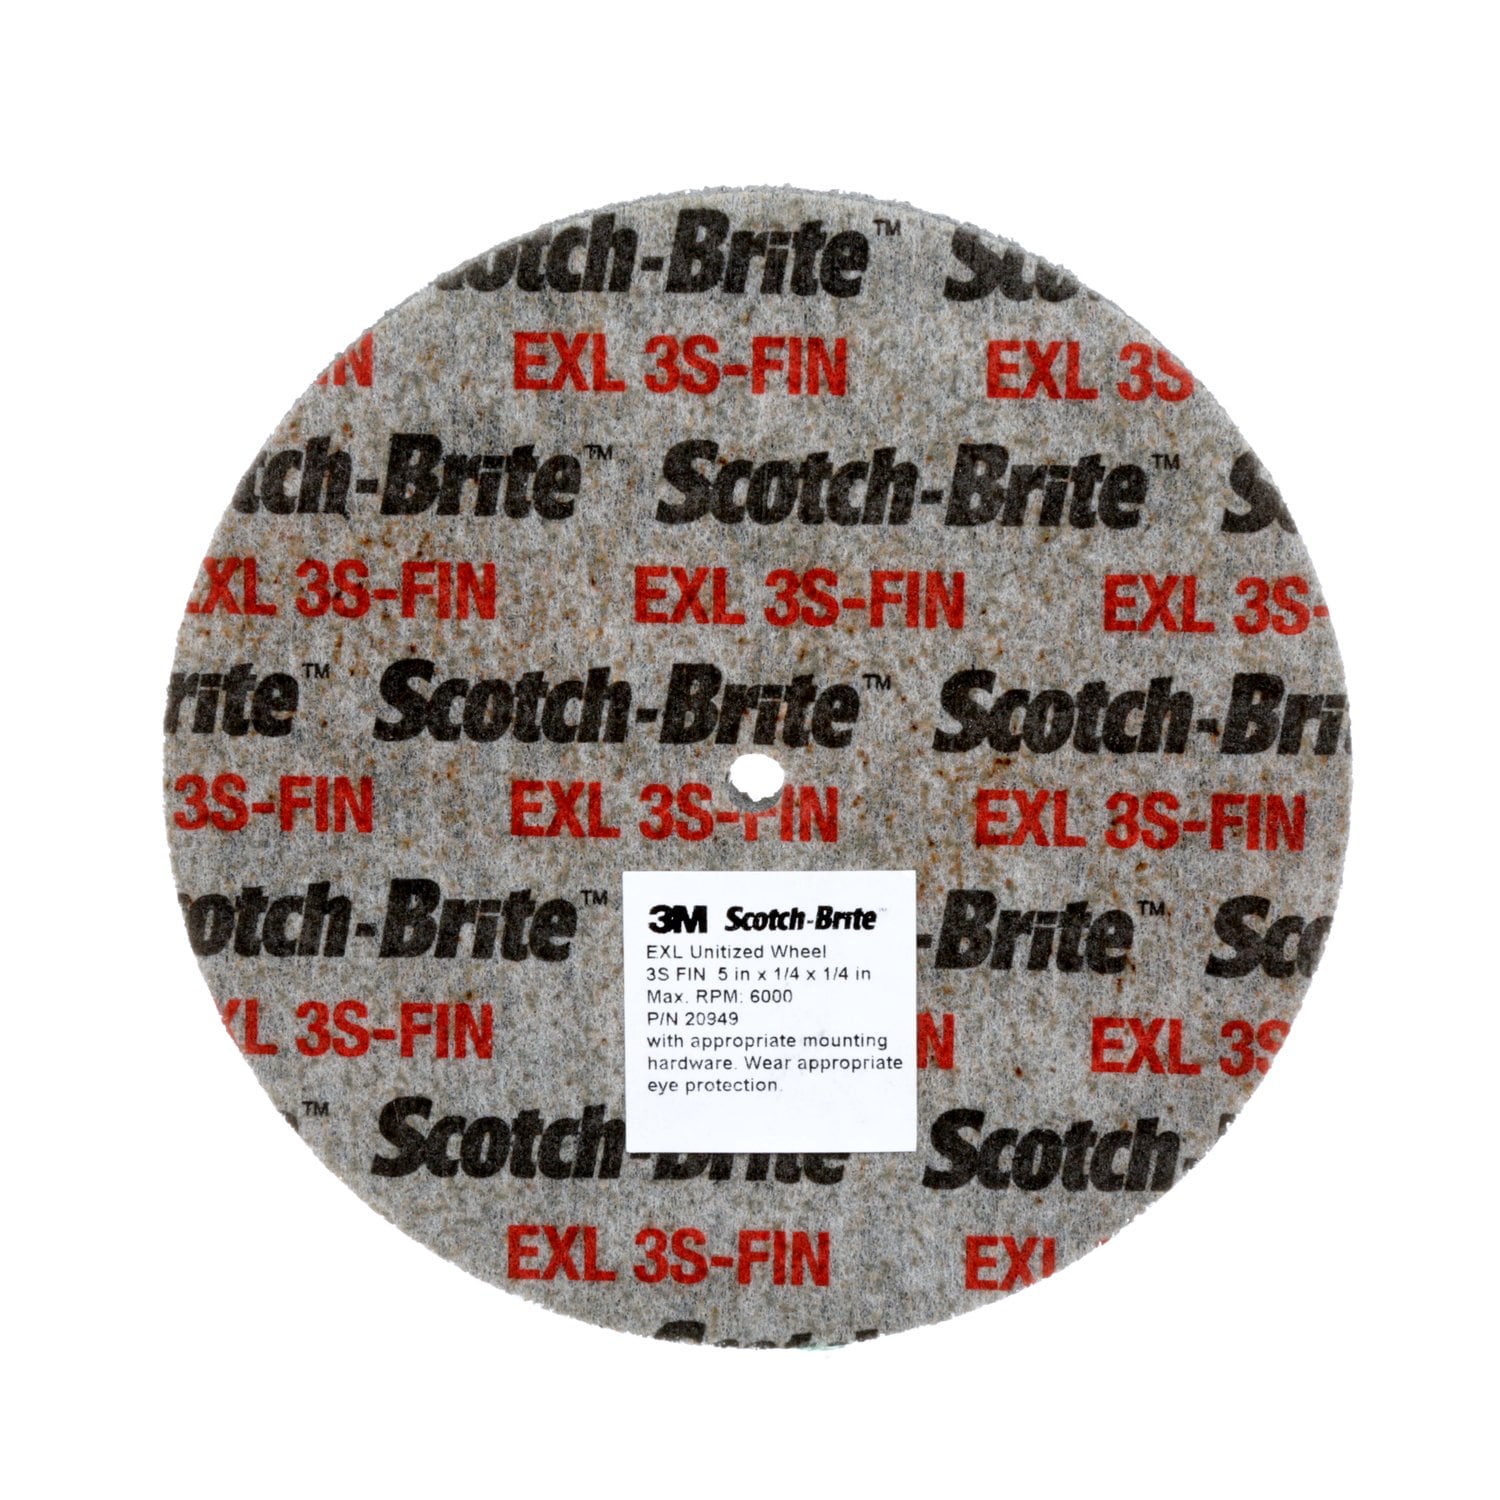 7010328997 - Scotch-Brite SST Unitized Wheel, 3 in x 1/4 in x 1/4 in 7S FIN, 40
ea/Case